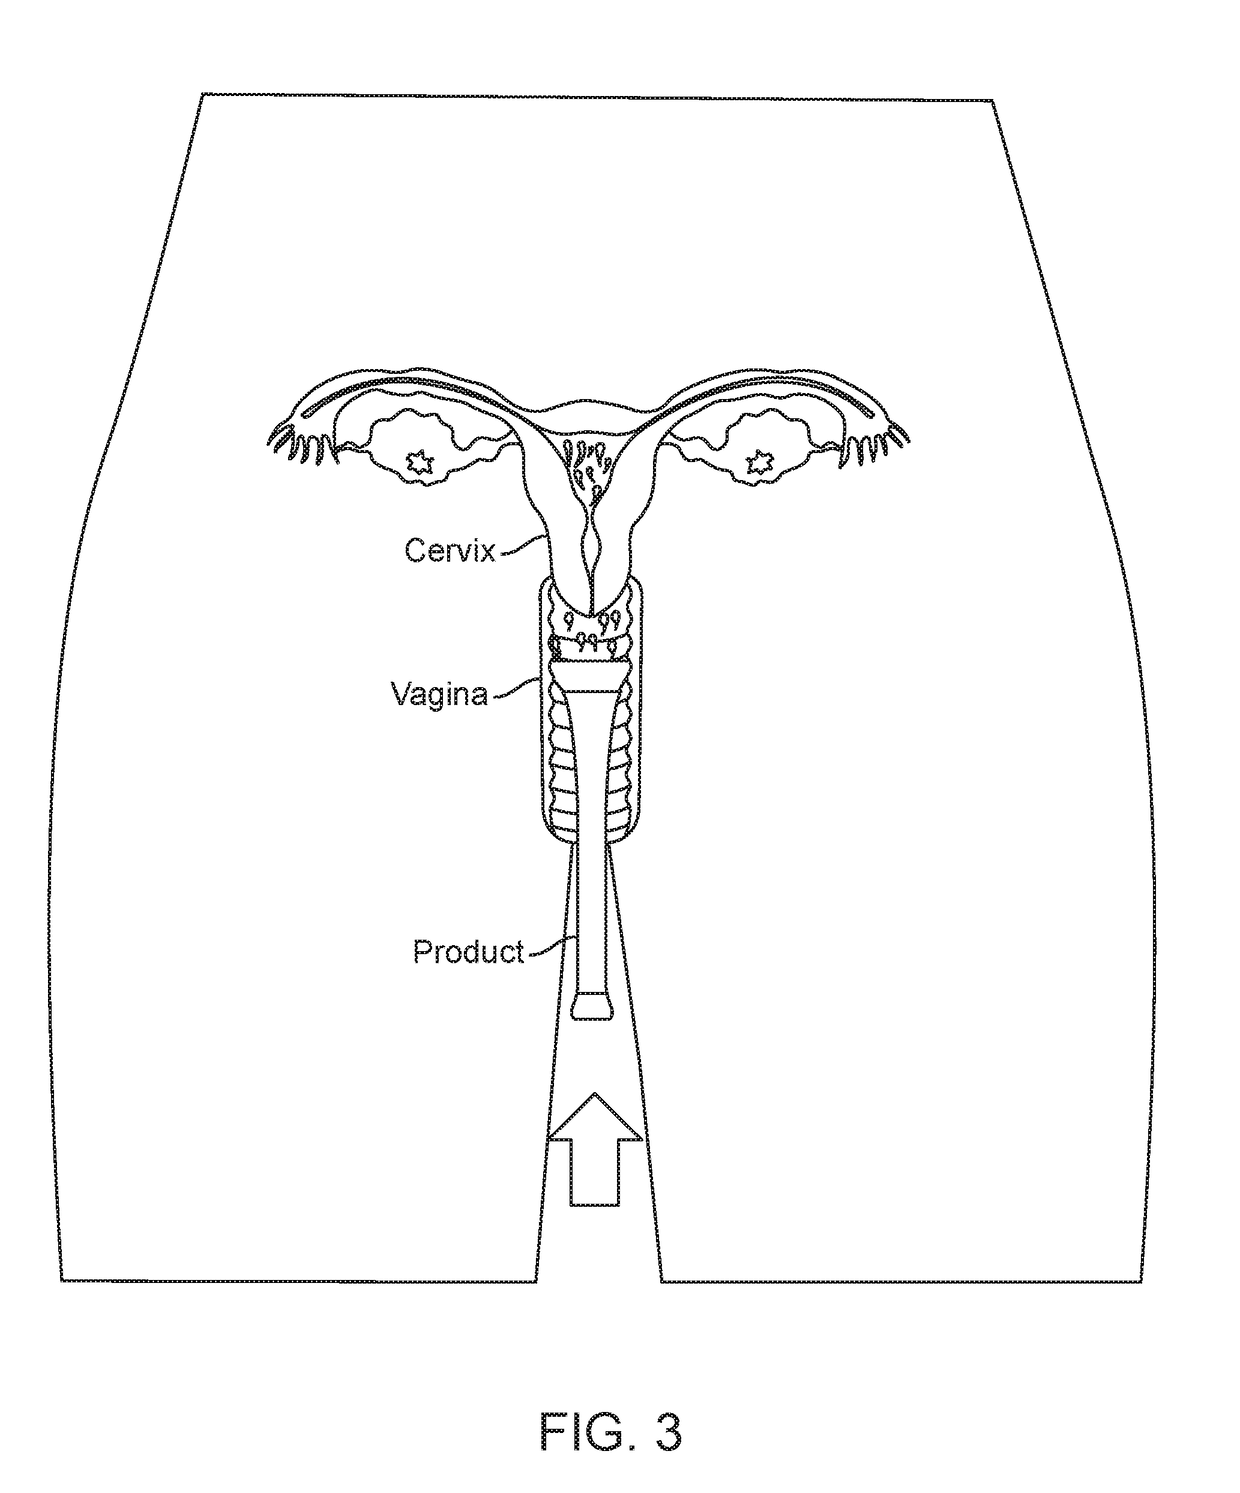 Intravaginal Fertility Device